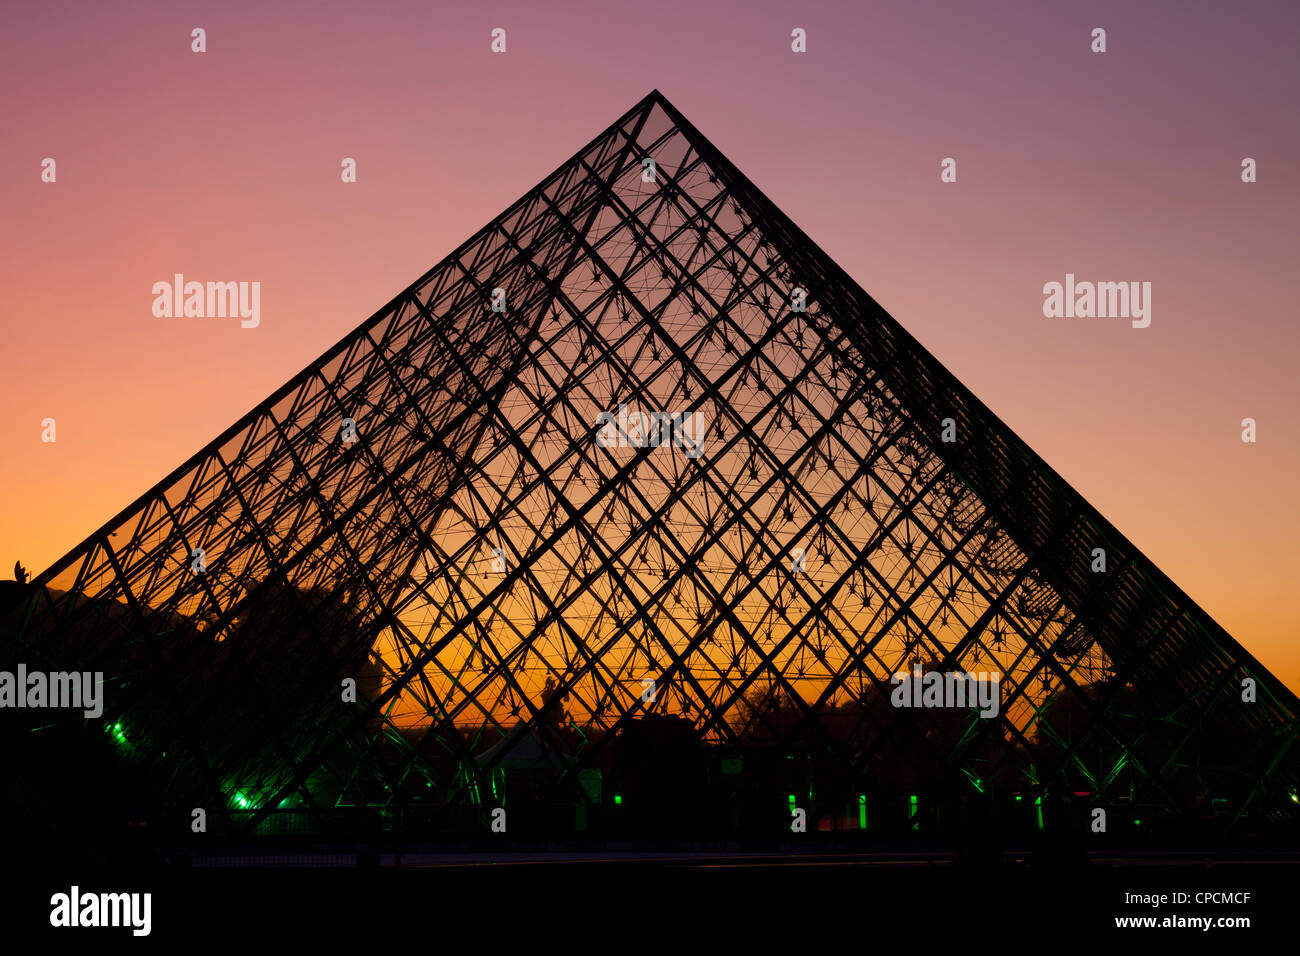 La piramide del Louvre al tramonto. Parigi, Francia. Foto Stock